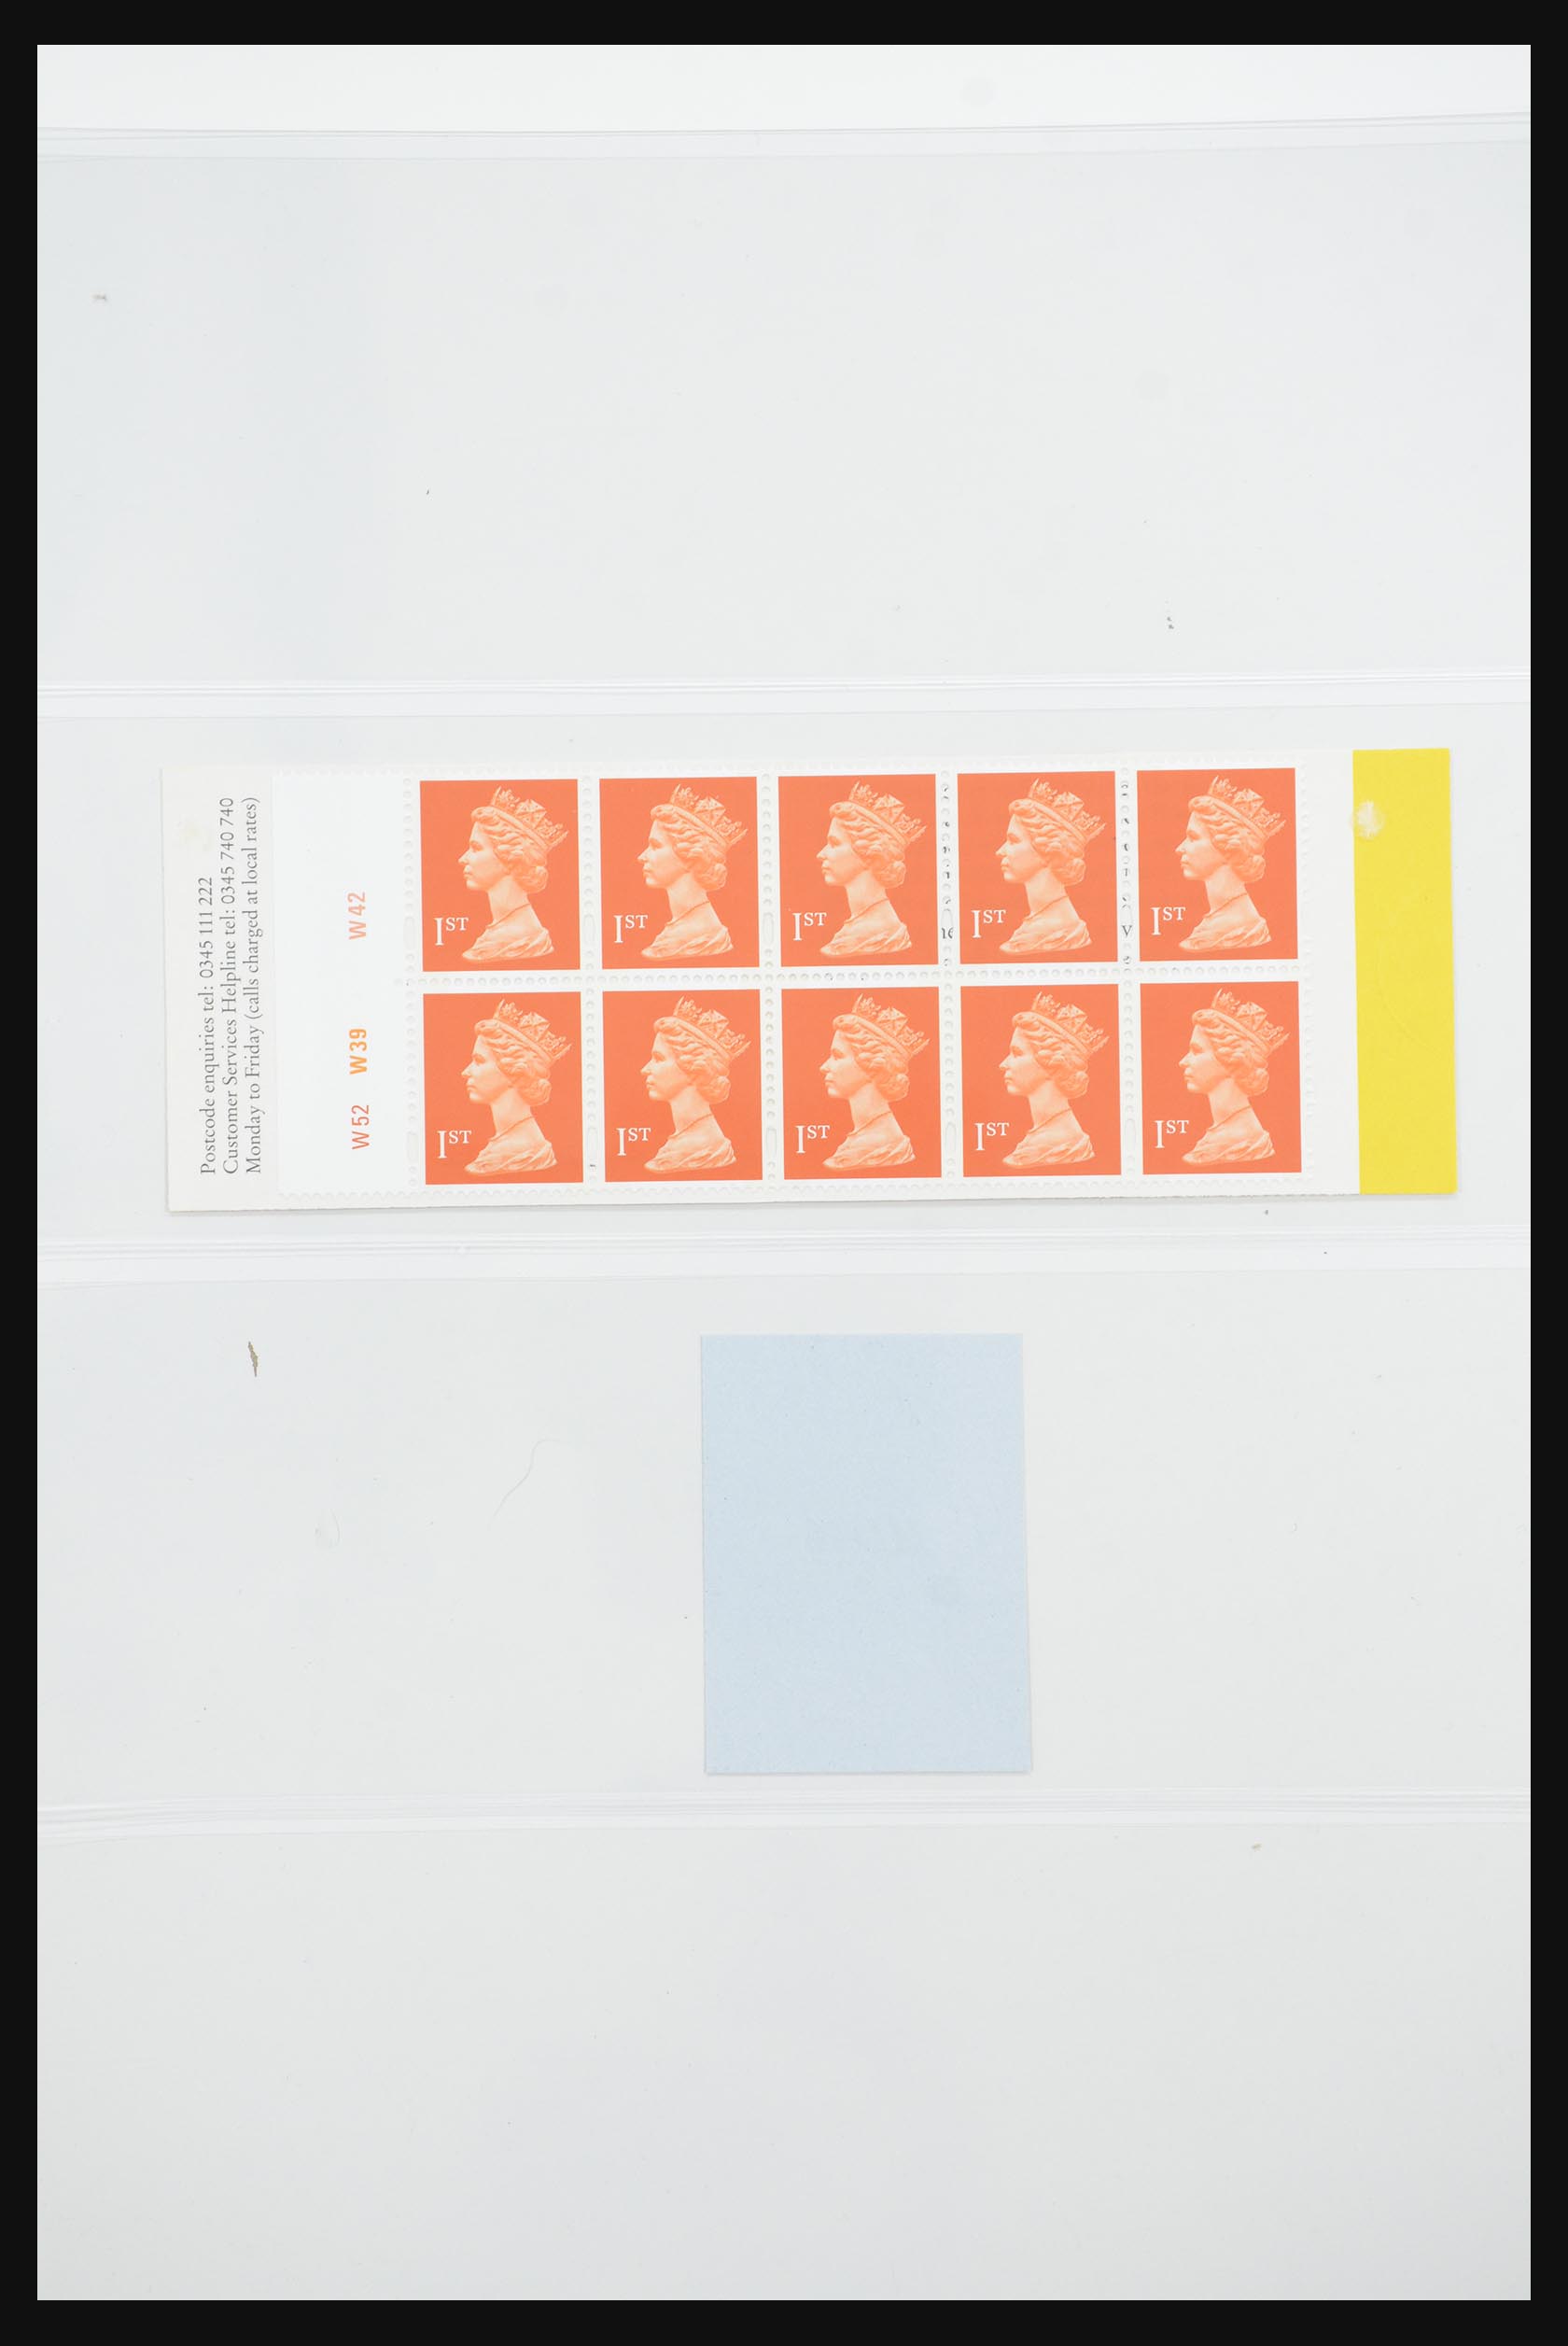 31960 152 - 31960 Great Britain stampbooklets 1989-2000.